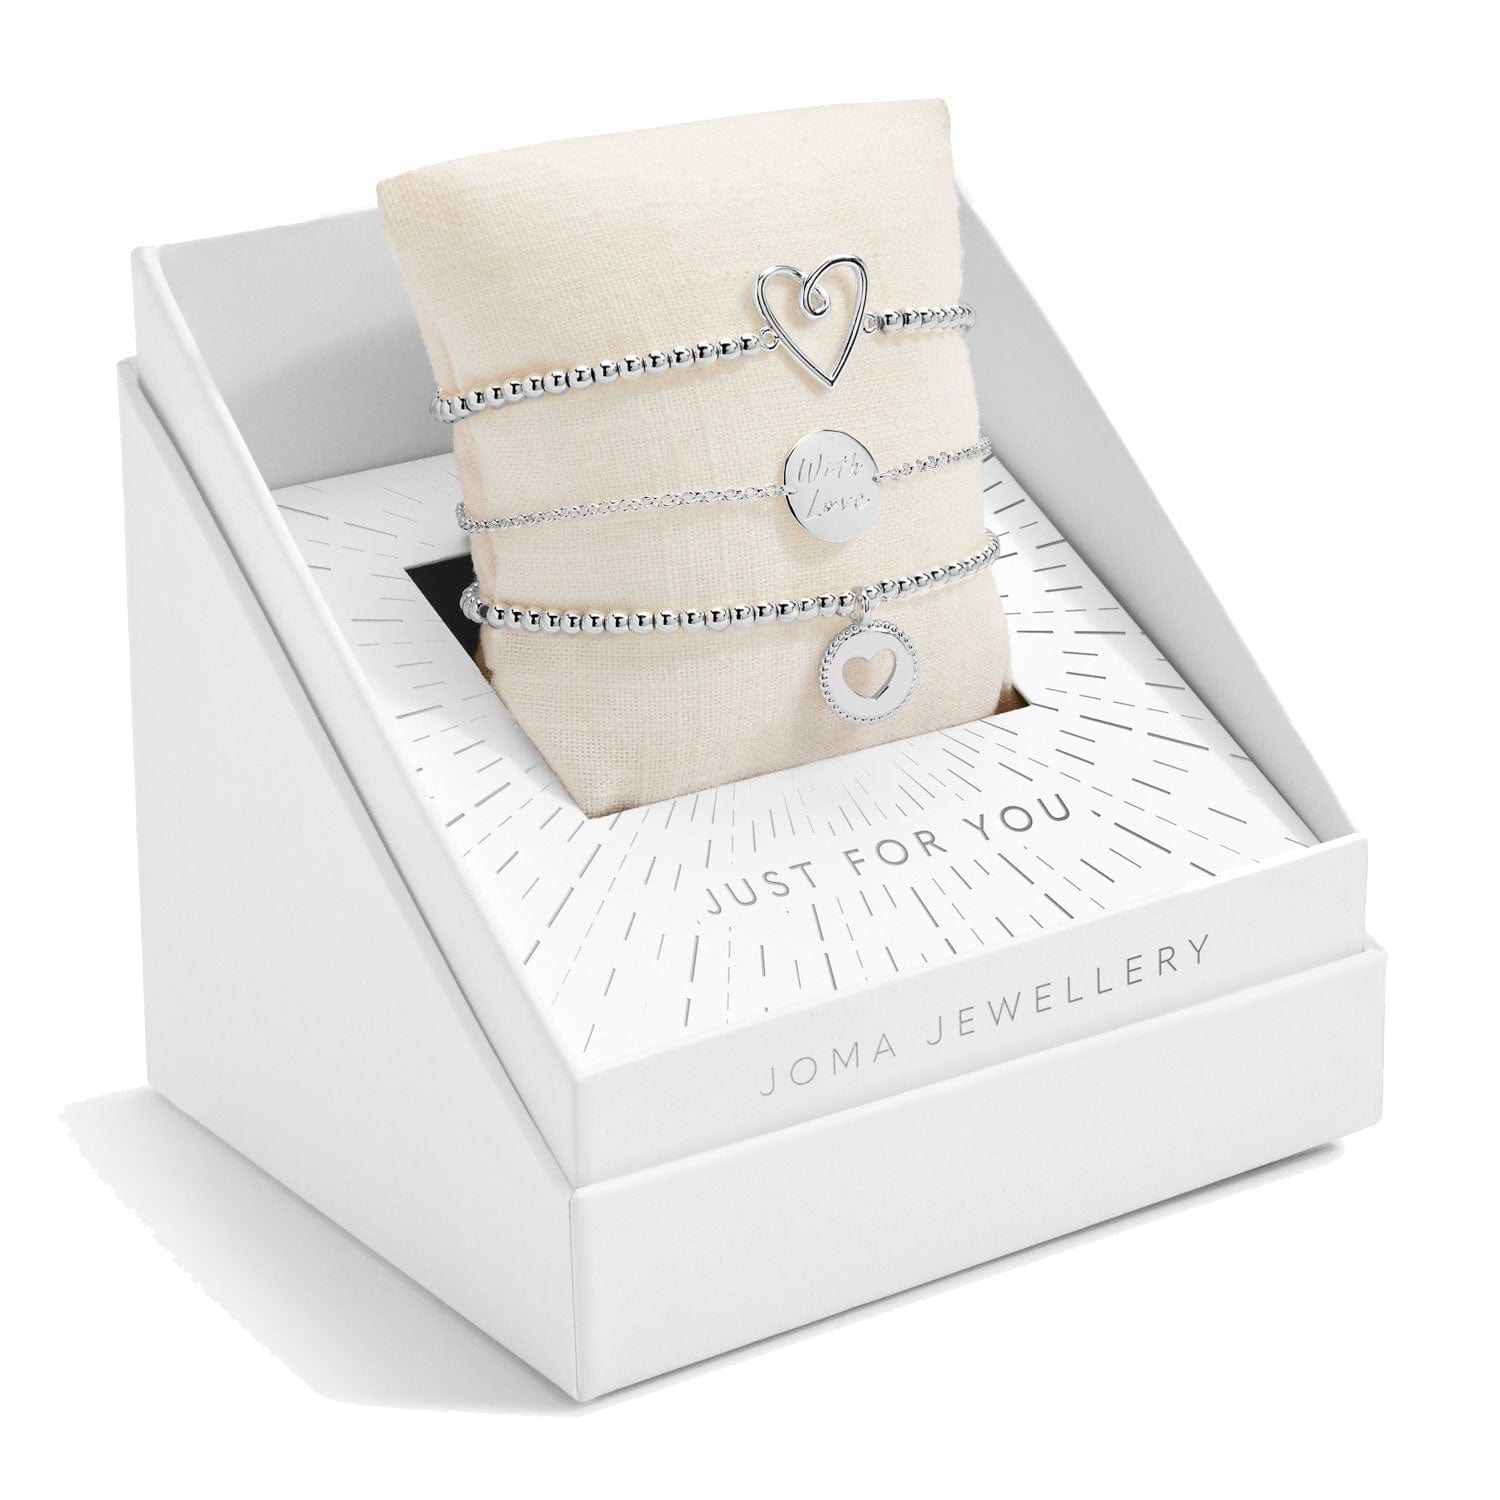 Joma Jewellery Boxed Bracelets Joma Jewellery Celebrate You 3 Bracelet Gift Box - Just For You